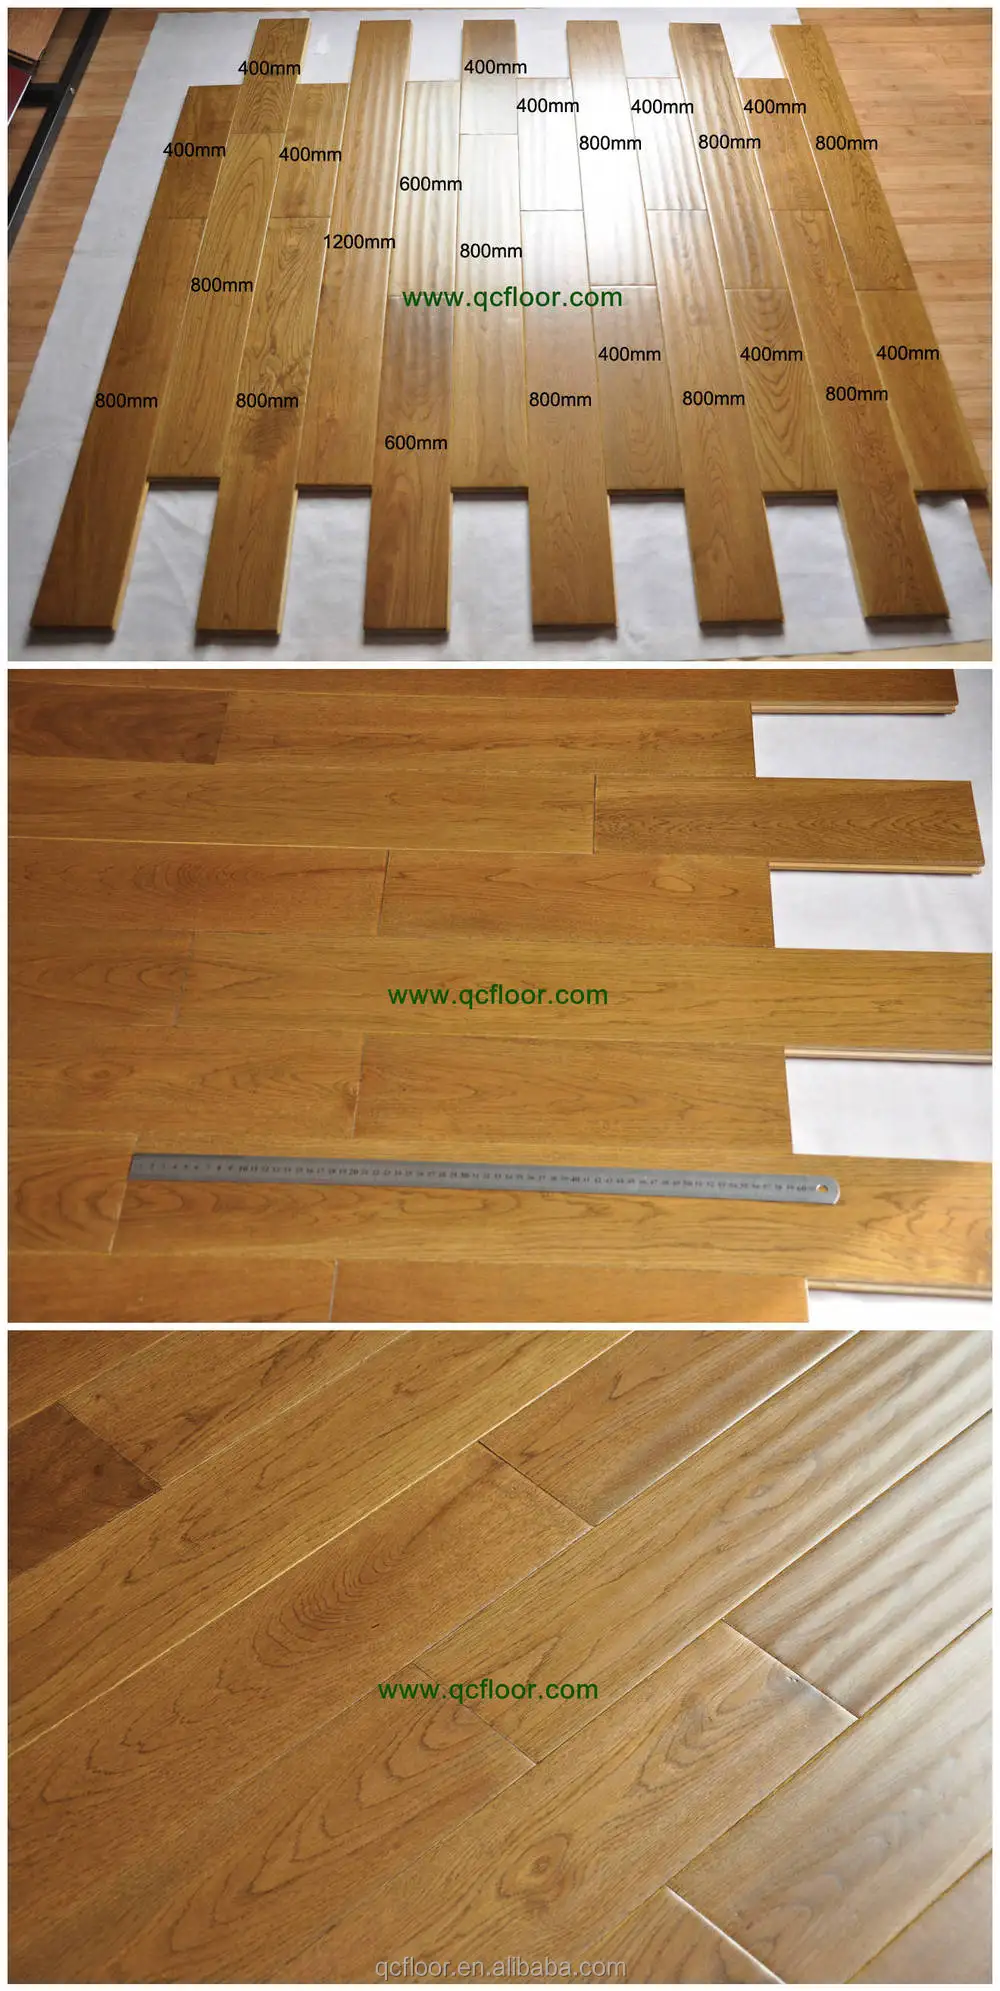 Interlocking White Oak Solid Wood Flooring Stained Parquet Wood